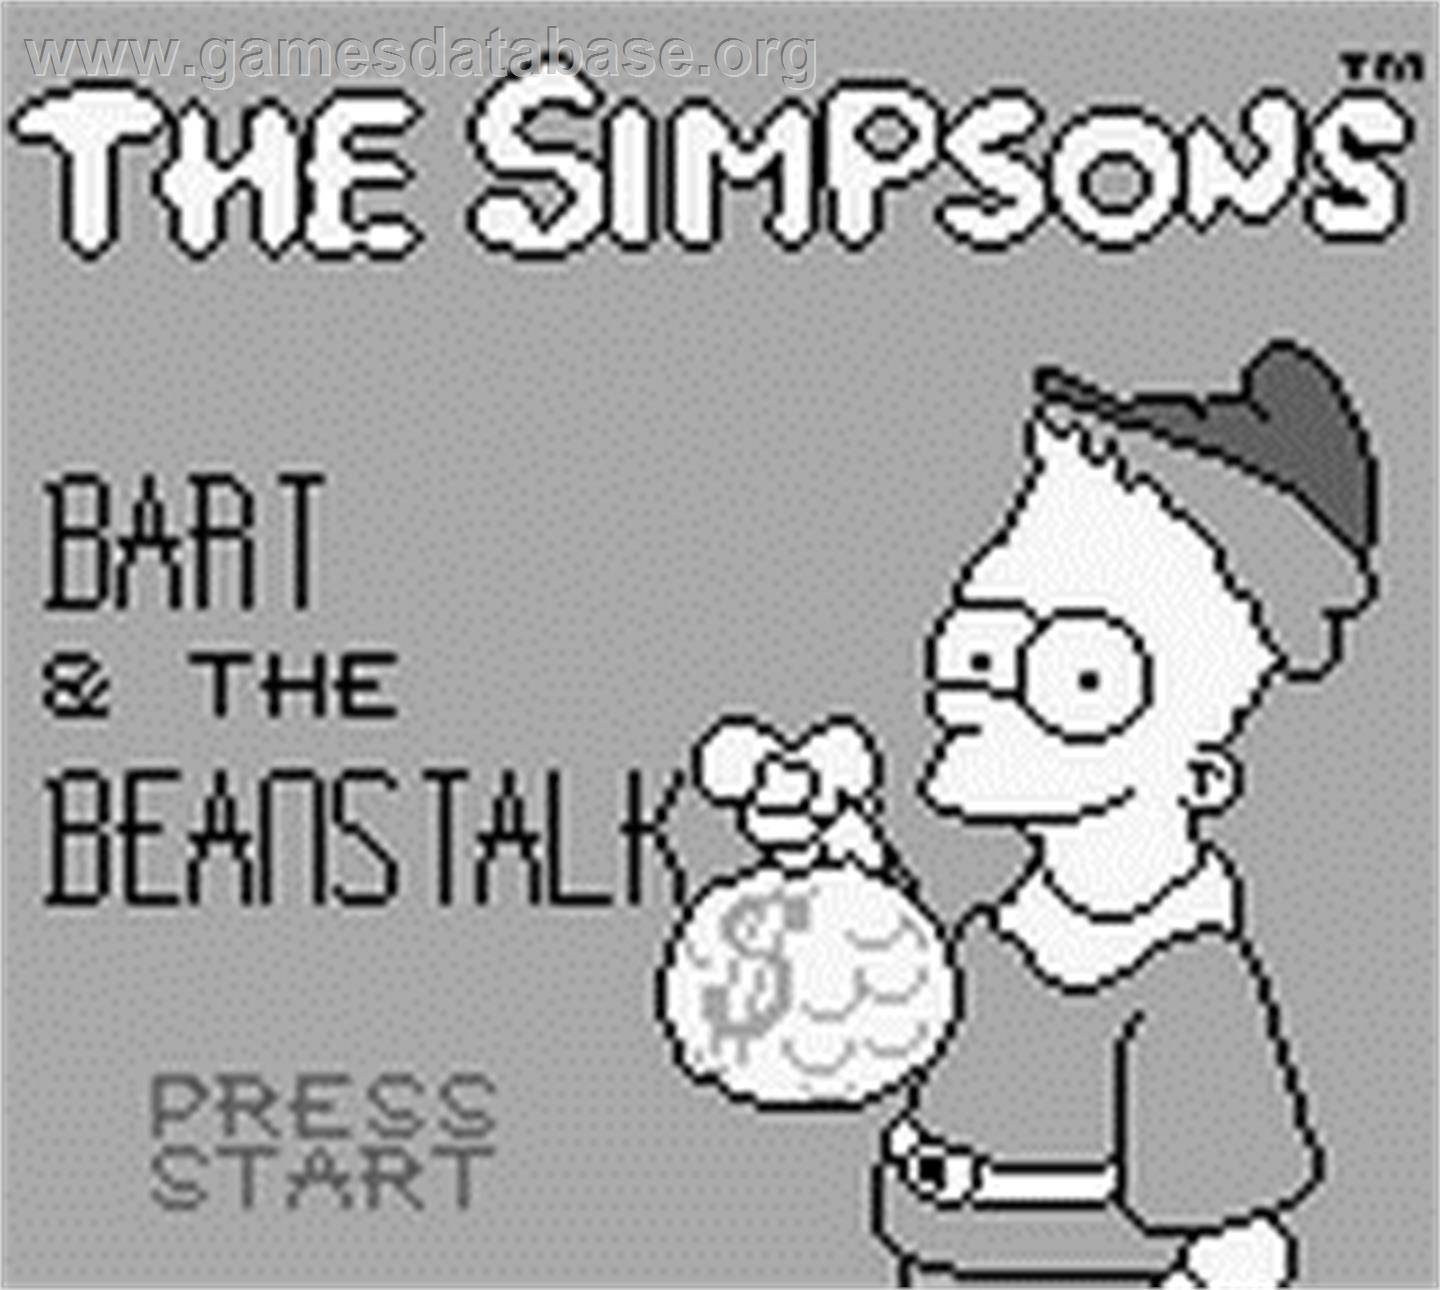 Simpsons: Bart & the Beanstalk - Nintendo Game Boy - Artwork - Title Screen